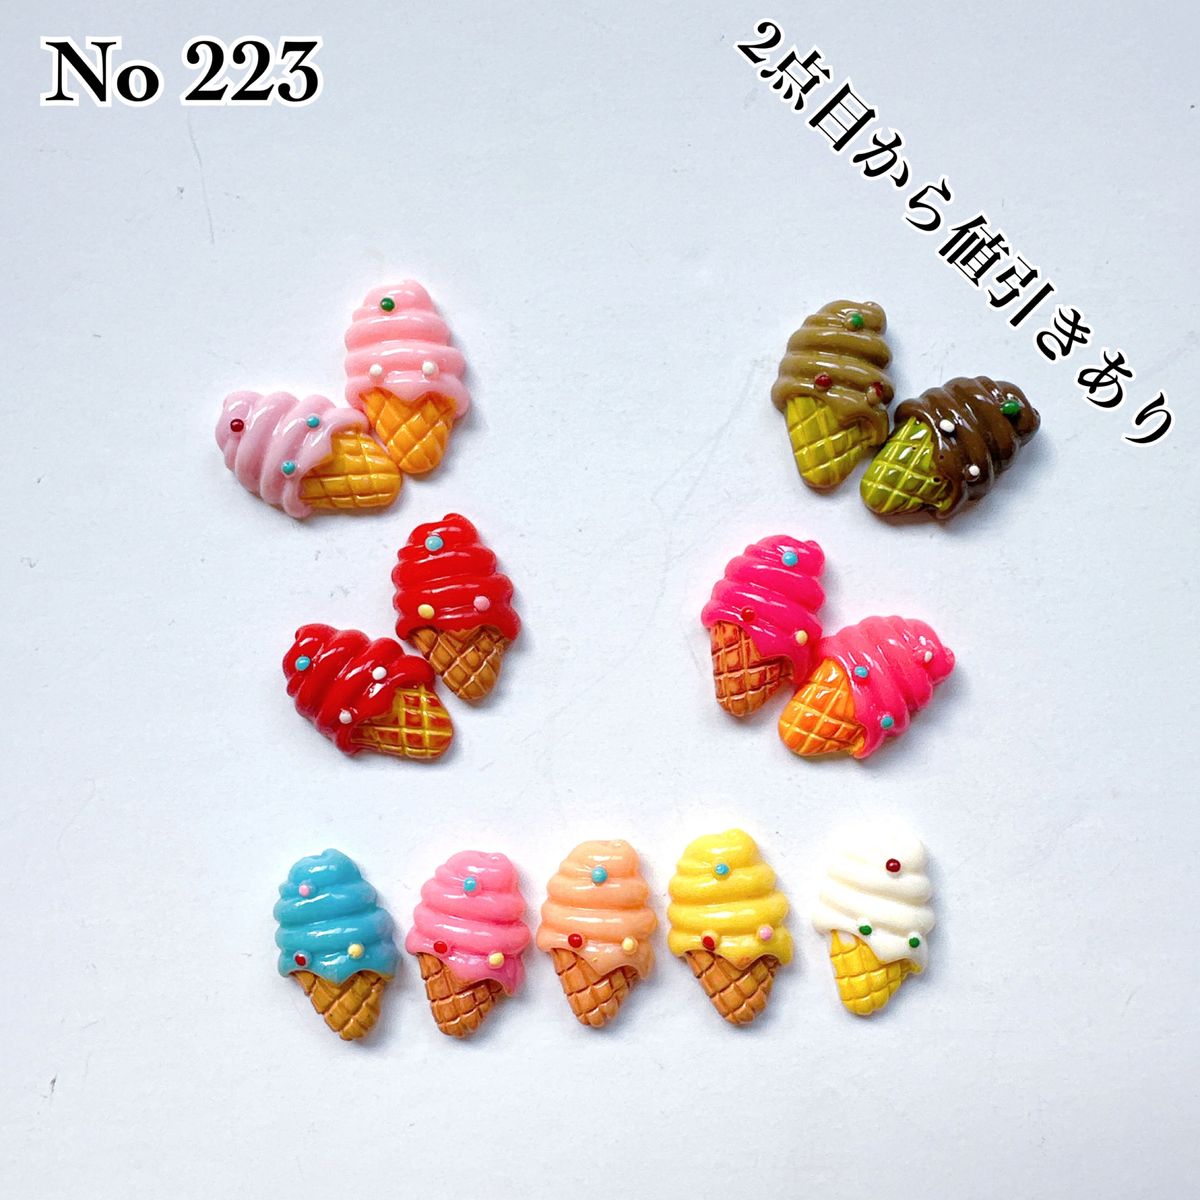 【No 223】デコレーションパーツ デコパ 貼り付け カボション ハンドメイド 資材 素材 プラパーツ 手芸 デコ アイス